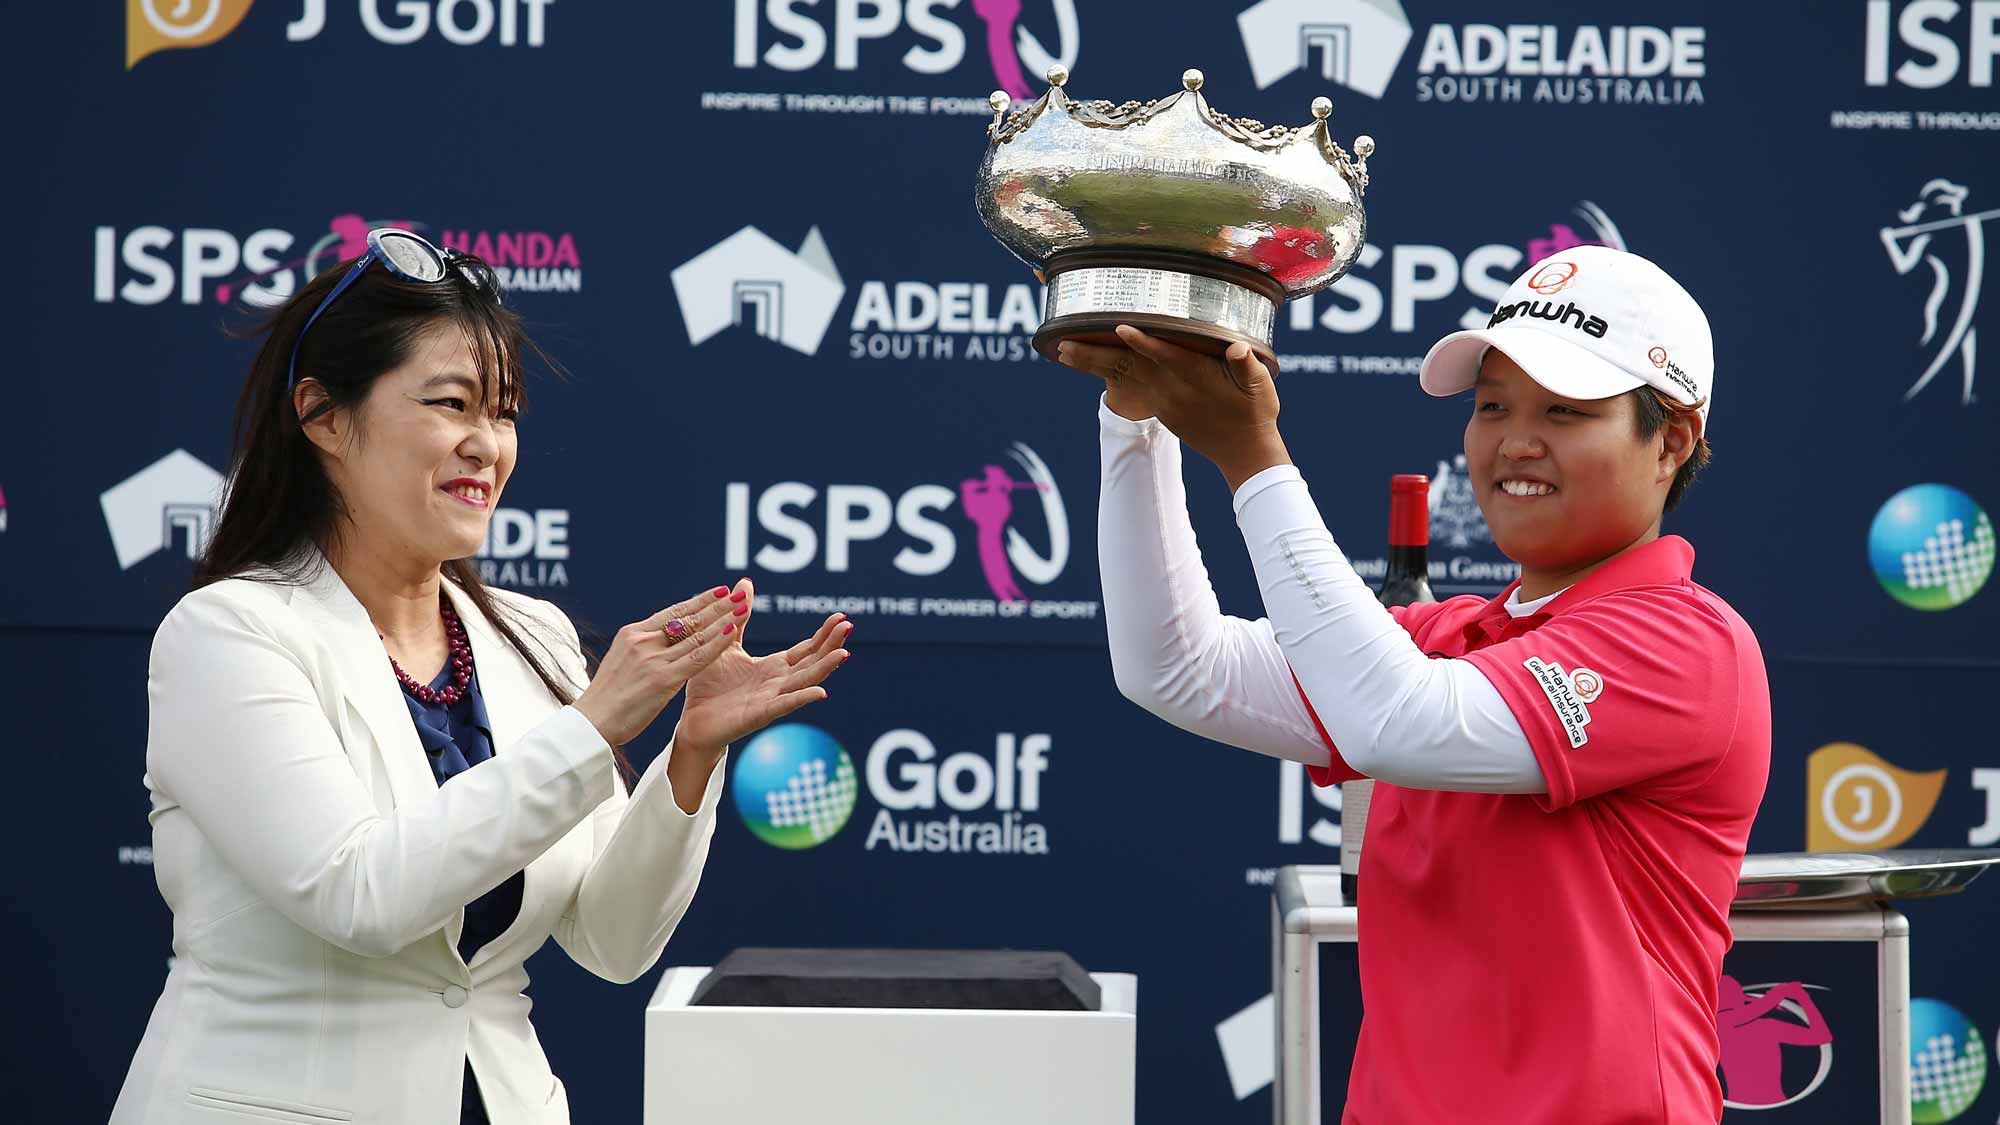 aru Nomura of Japan is presented with the winners trophy by Midori Miyazaki after winning the Women's Australian Open